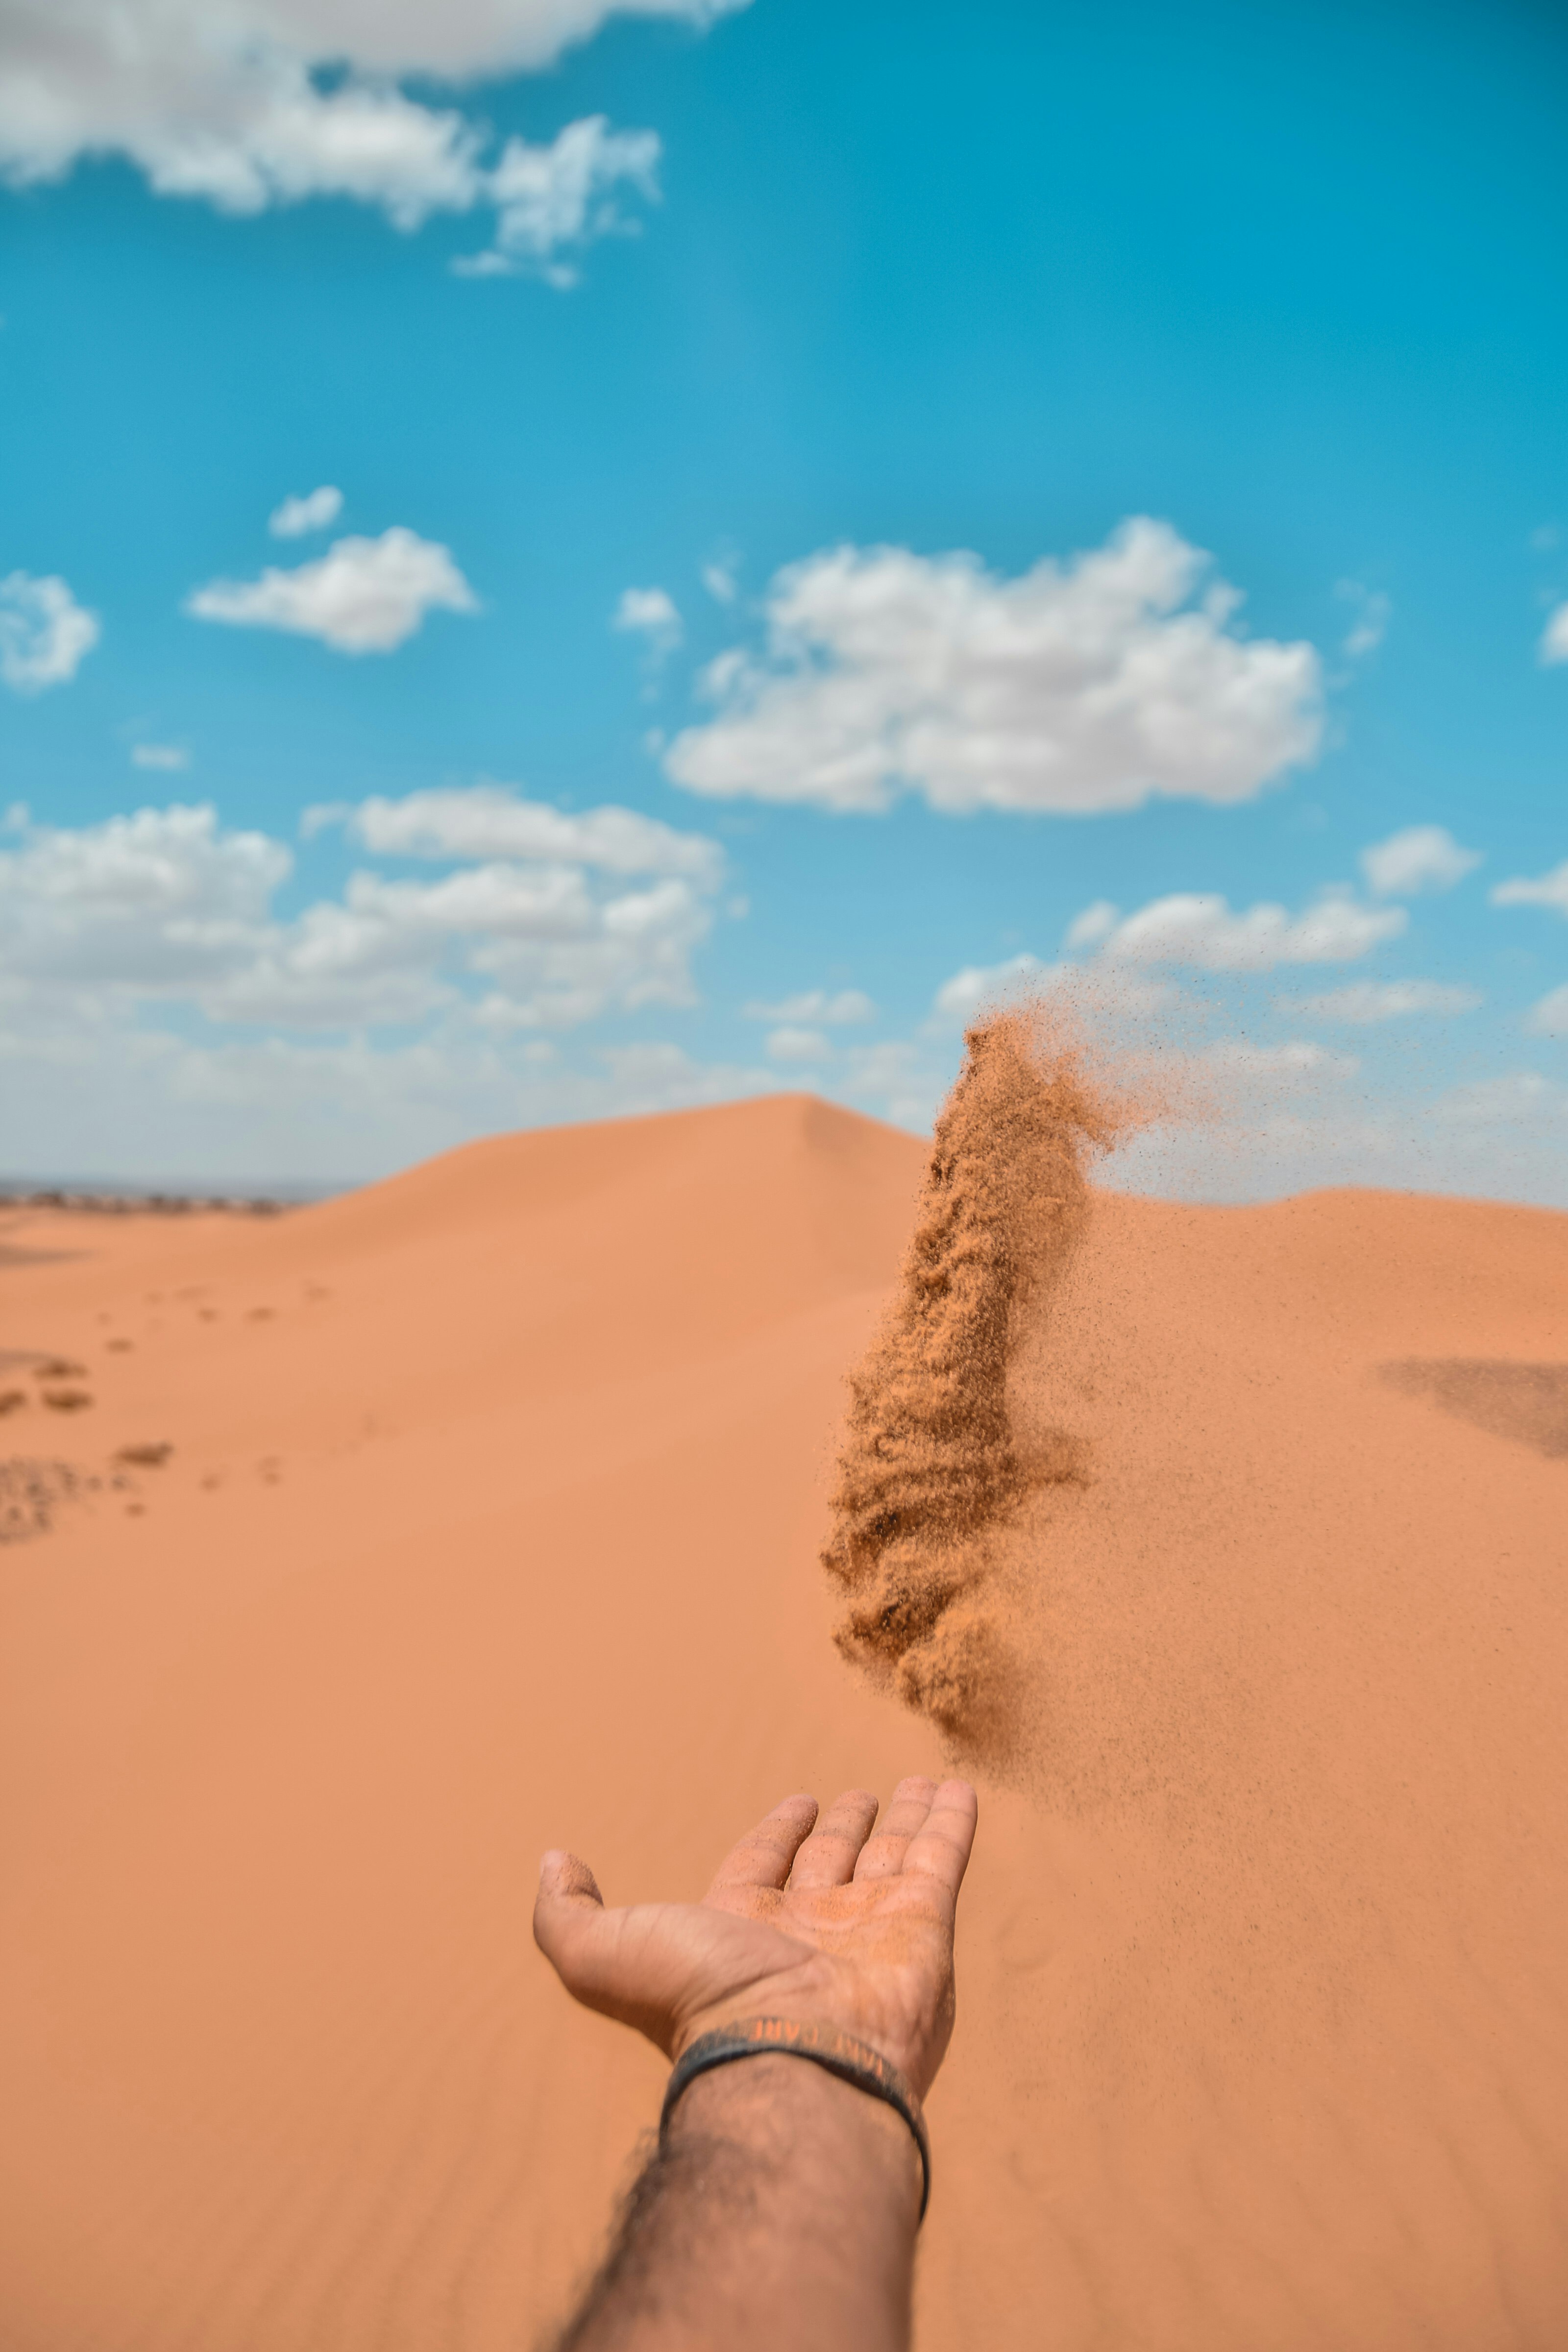 person throwing sand on desert sand dune